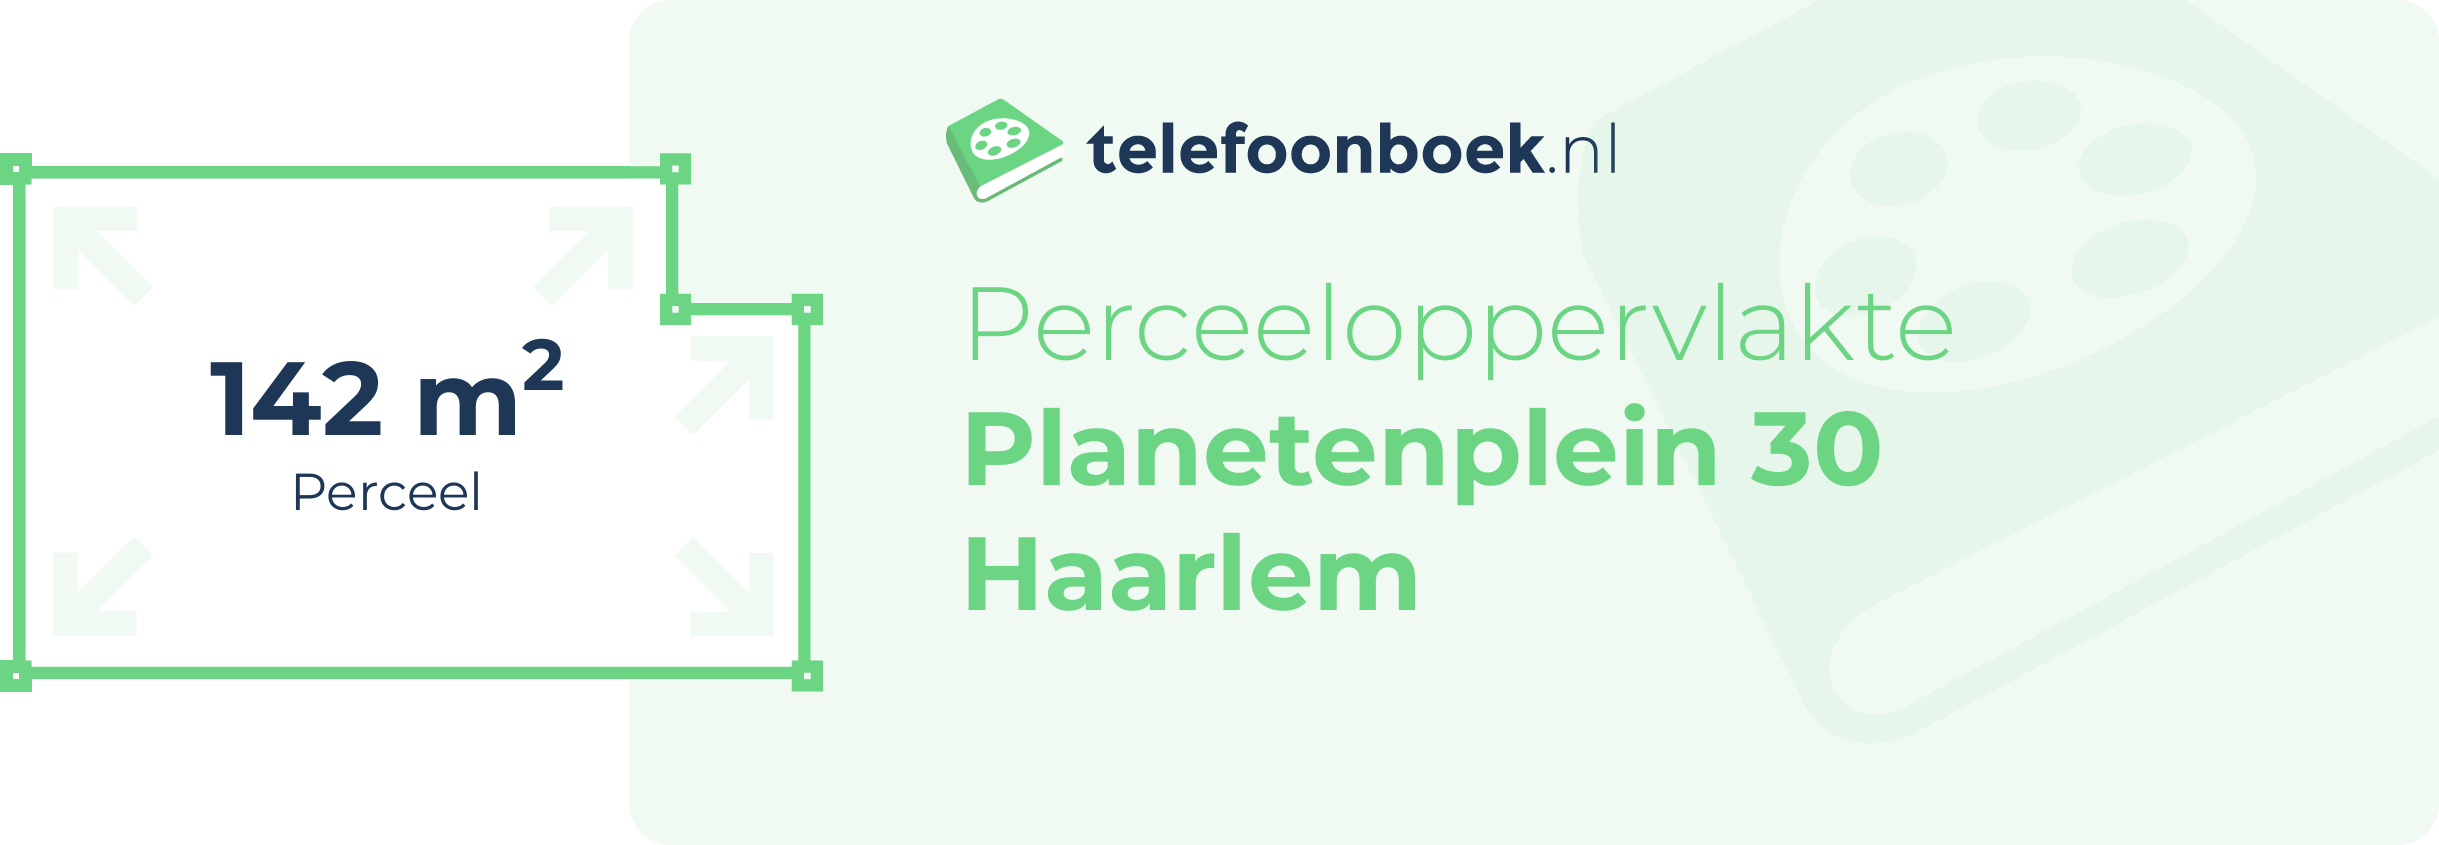 Perceeloppervlakte Planetenplein 30 Haarlem